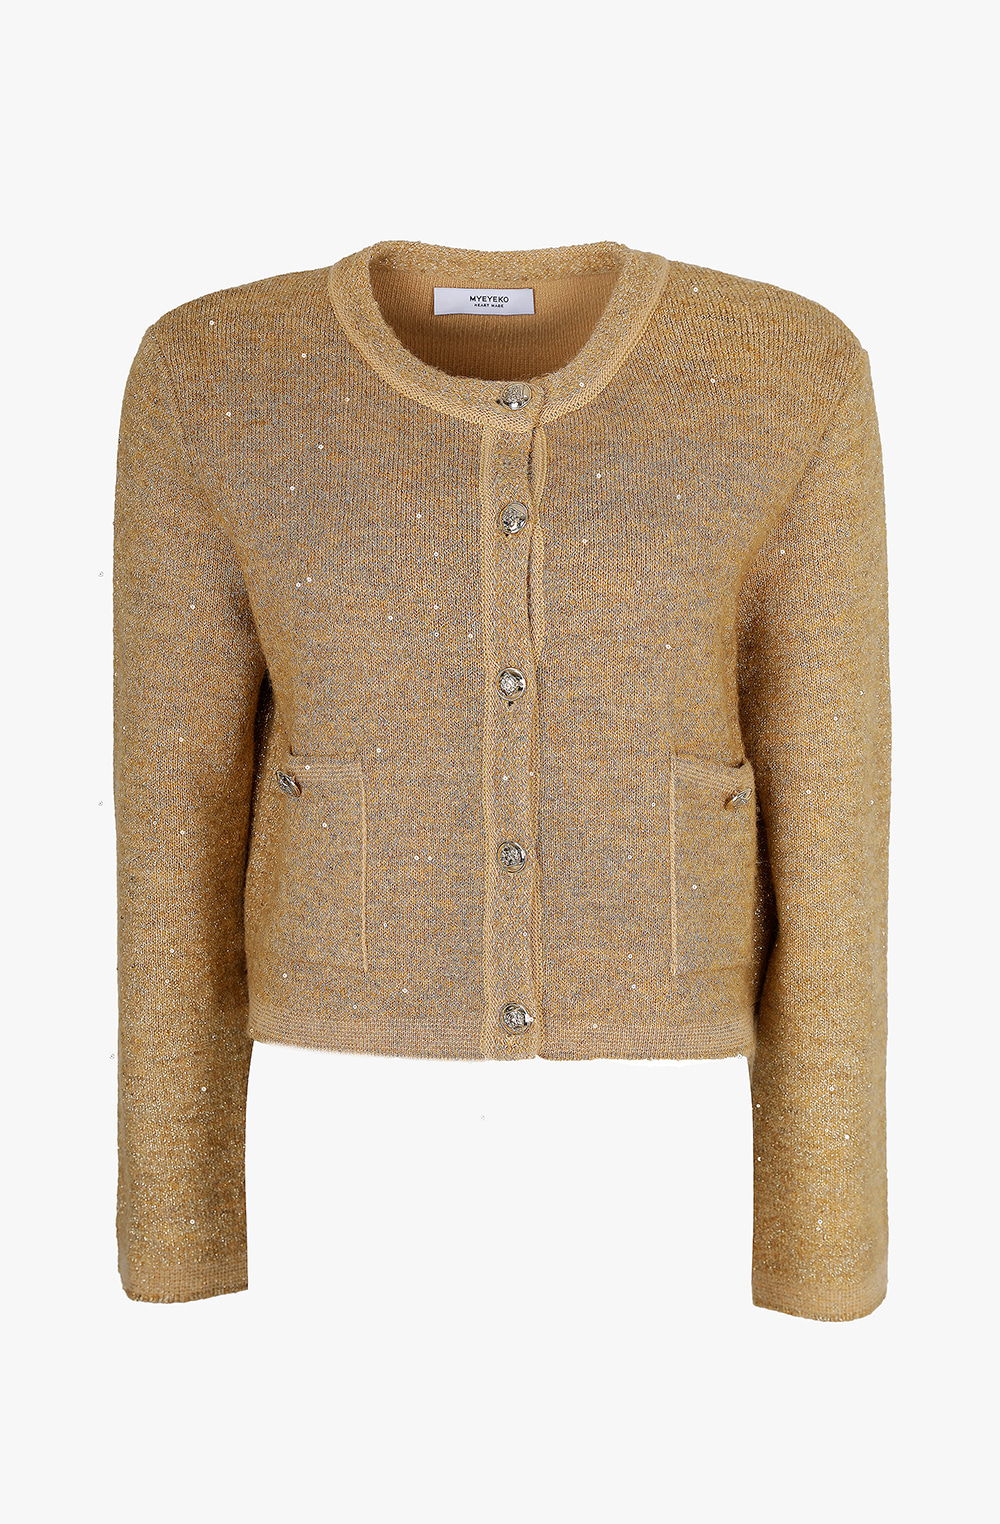 HIGH QUALITY LINE - Sequin Embellished Knit Jacket (GOLD) 2차 예약 오더